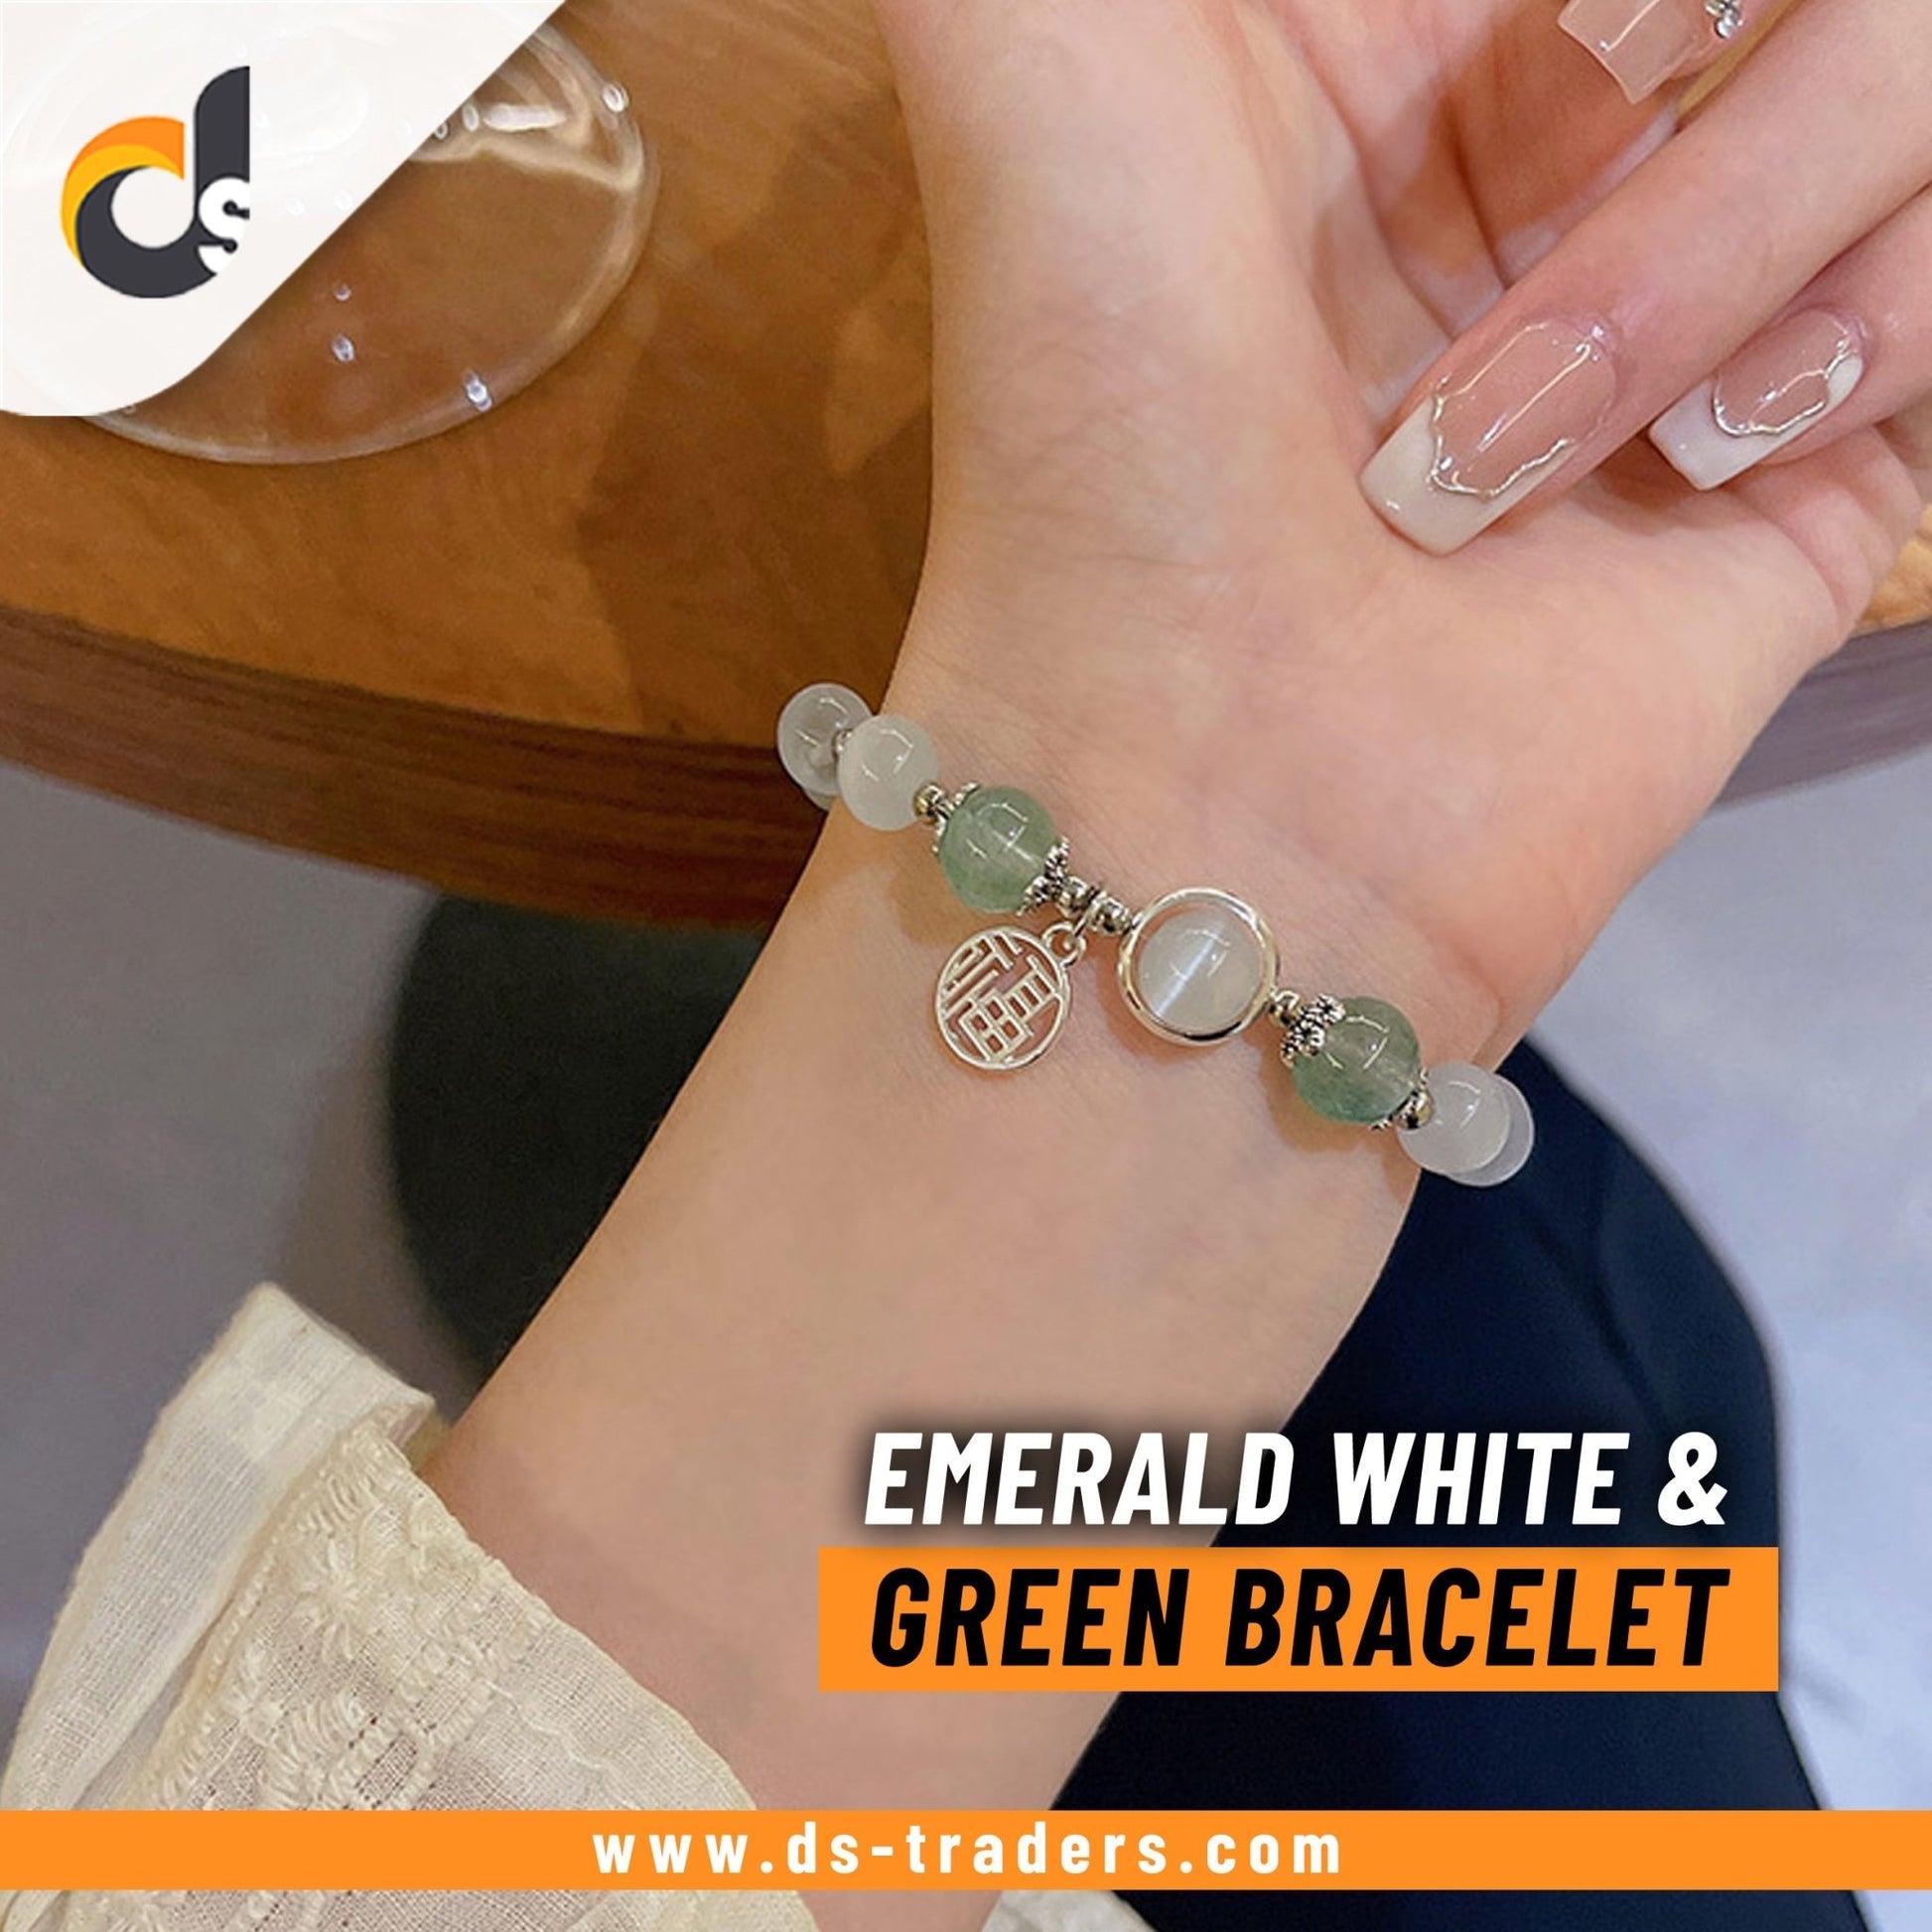 Emerald White & Green Bracelet - DS Traders